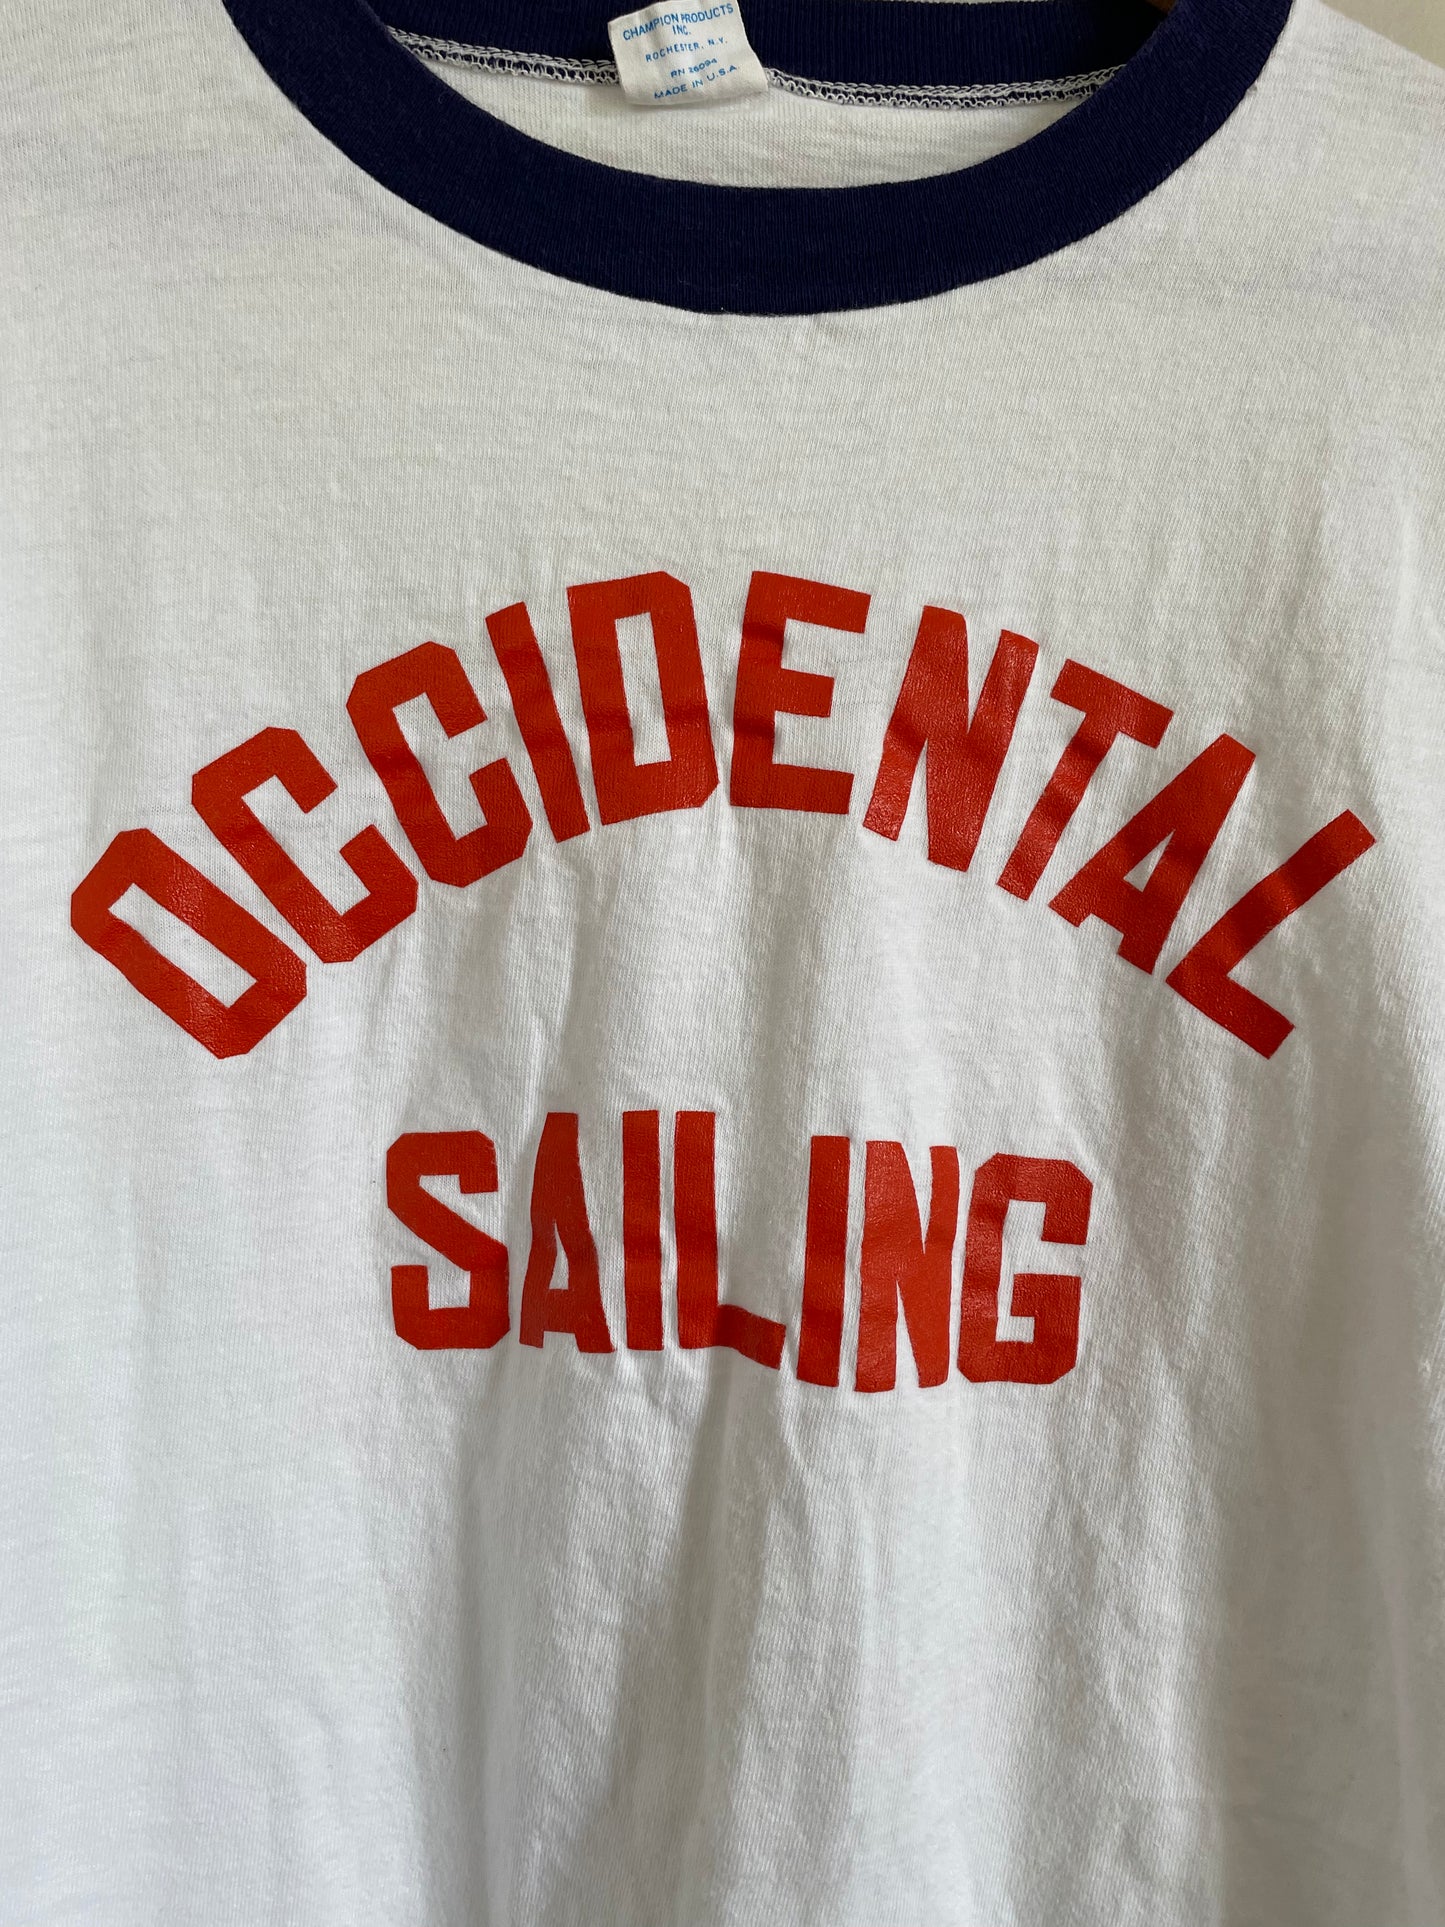 70s Champion Occidental Sailing Tee